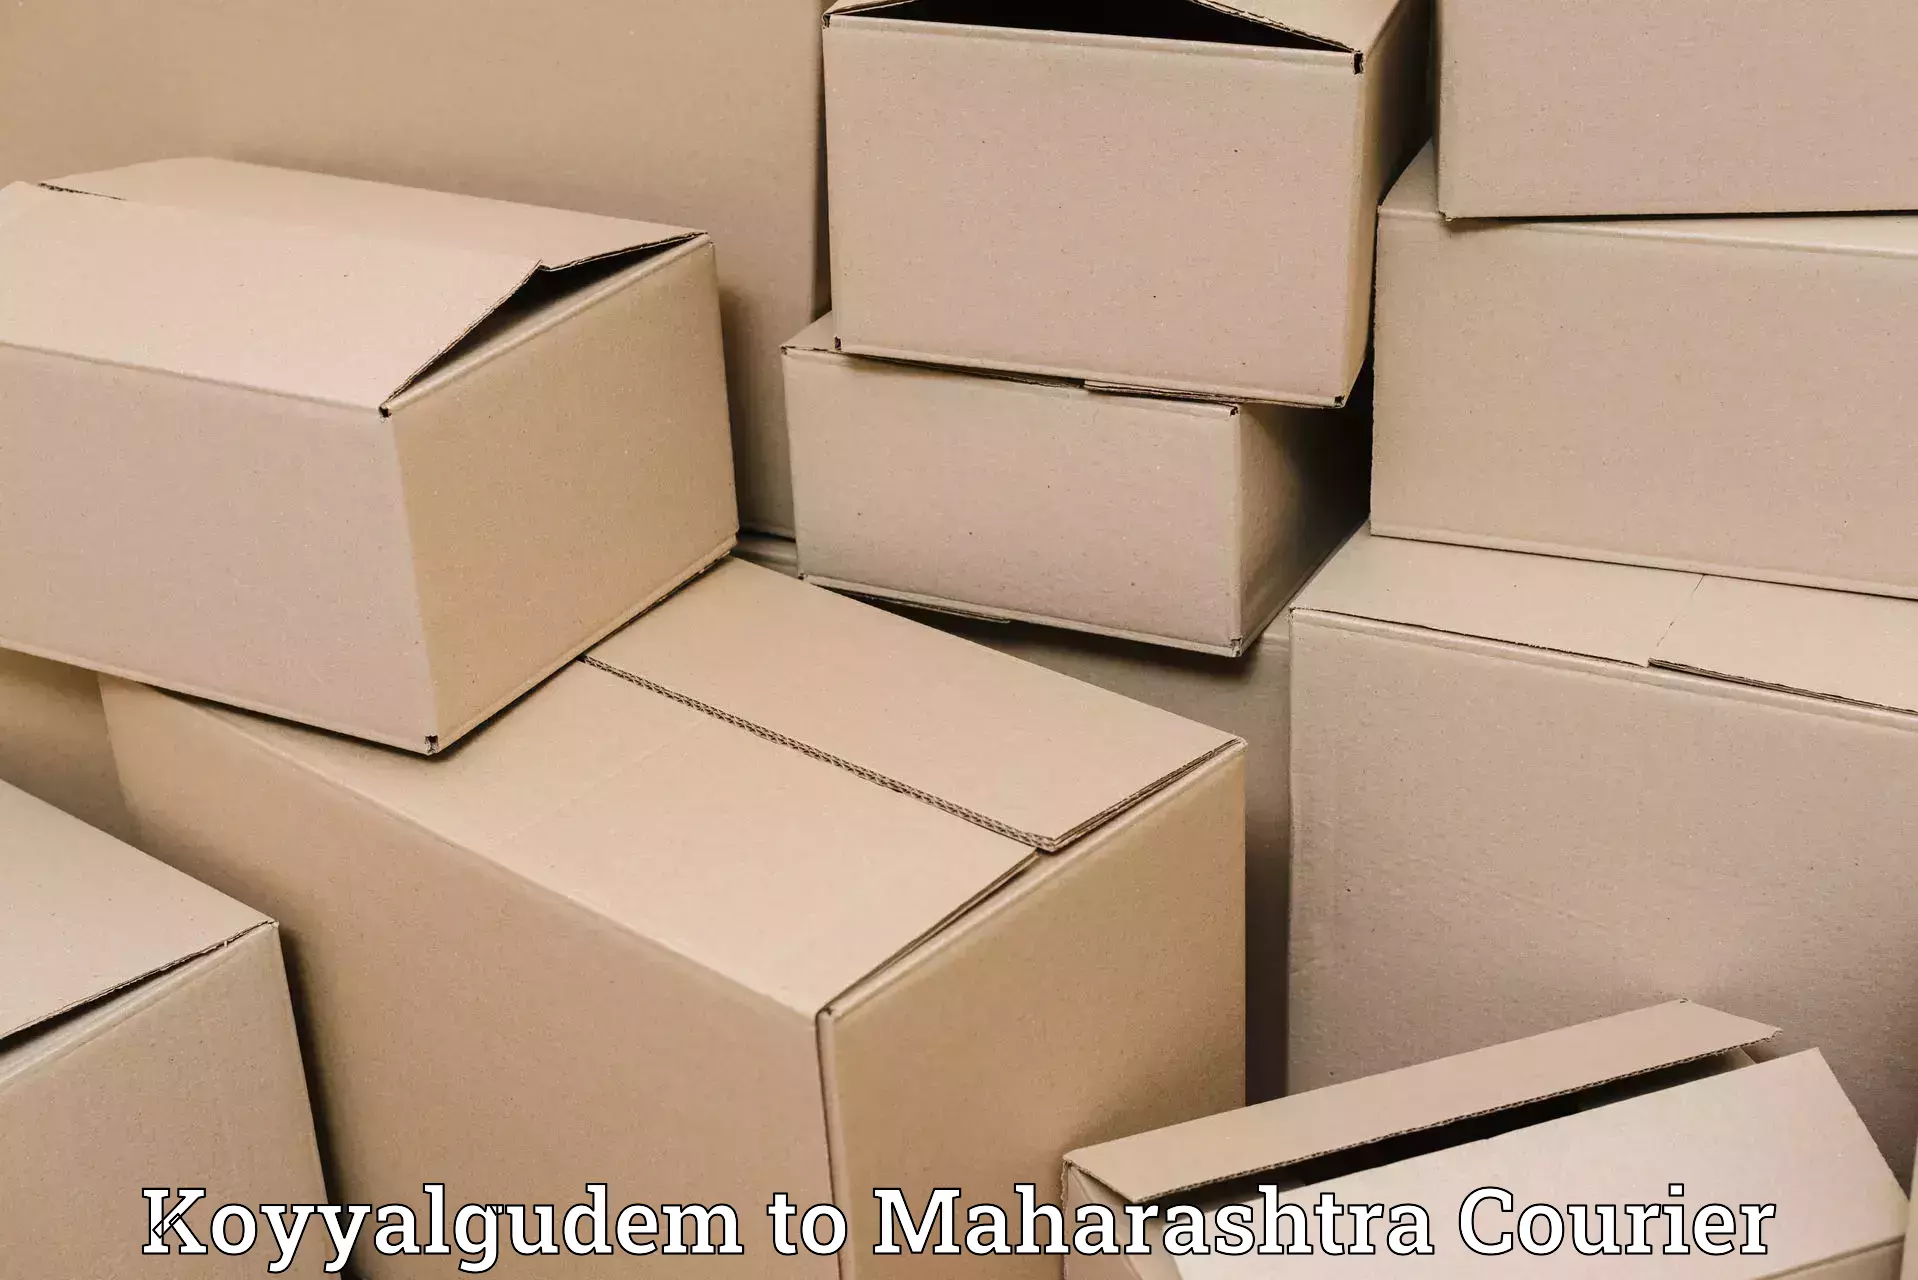 Secure shipping methods Koyyalgudem to Navi Mumbai